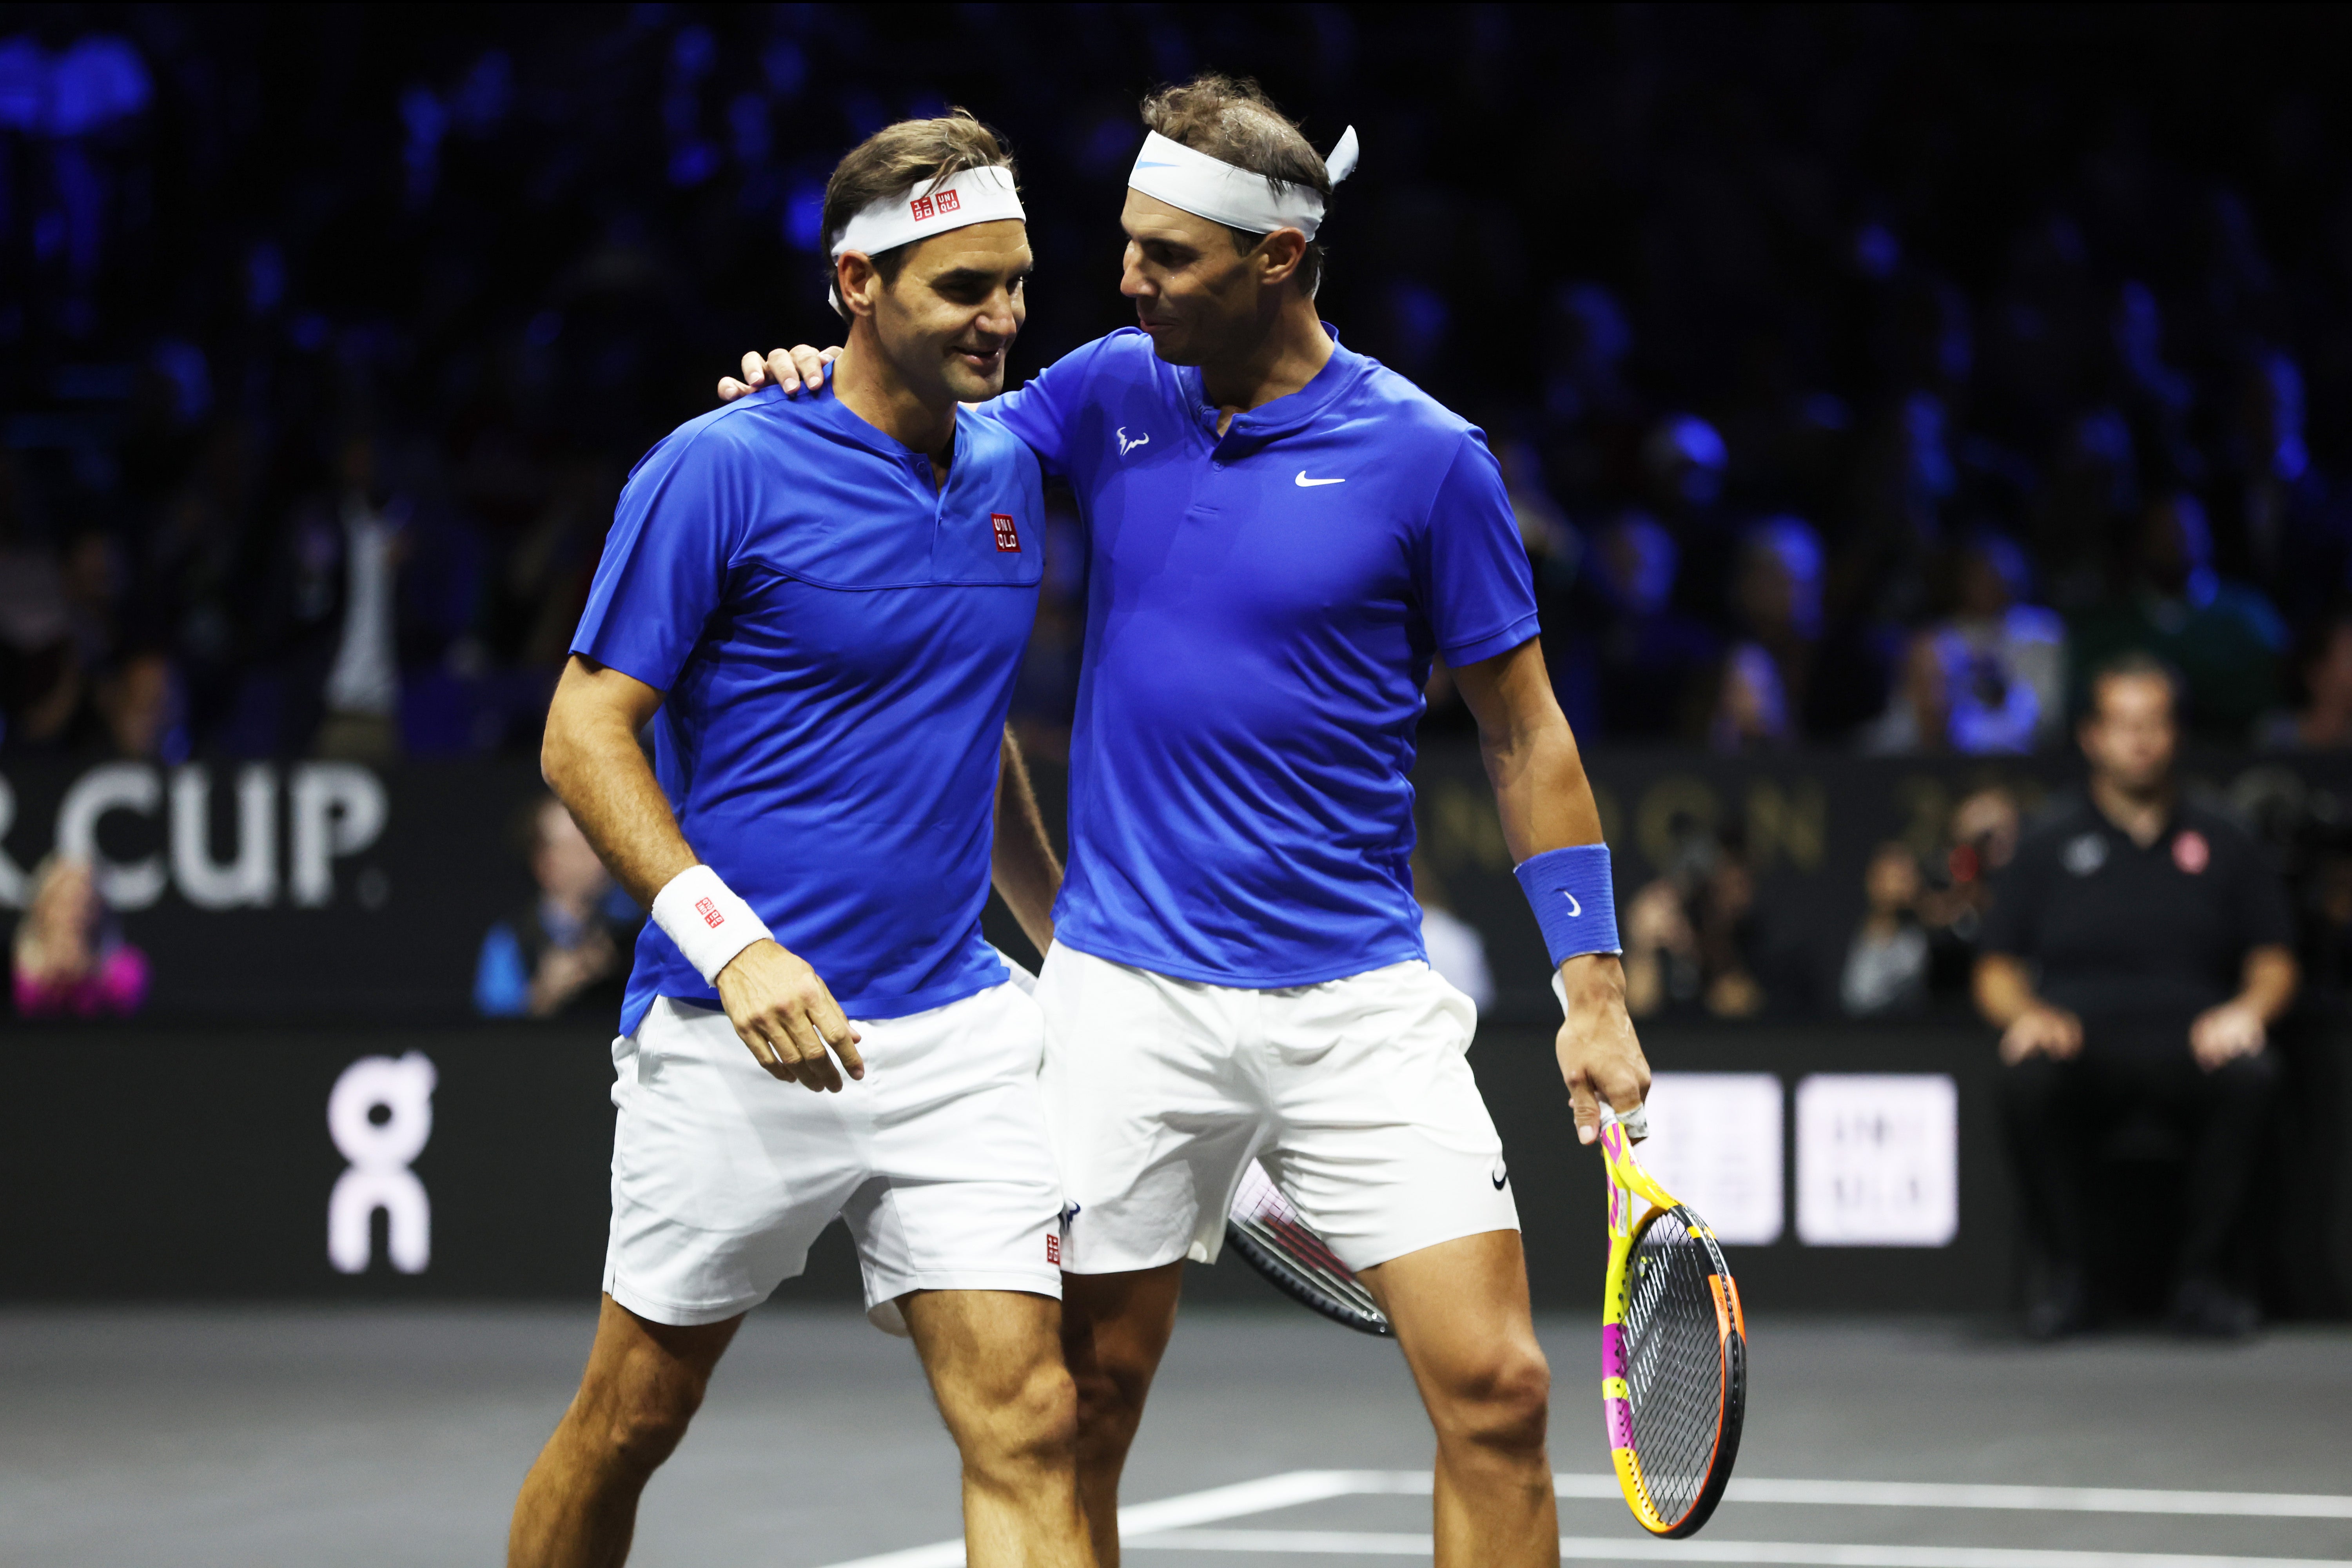 Rafael Nadal played alongside Roger Federer in the Swiss star’s final match